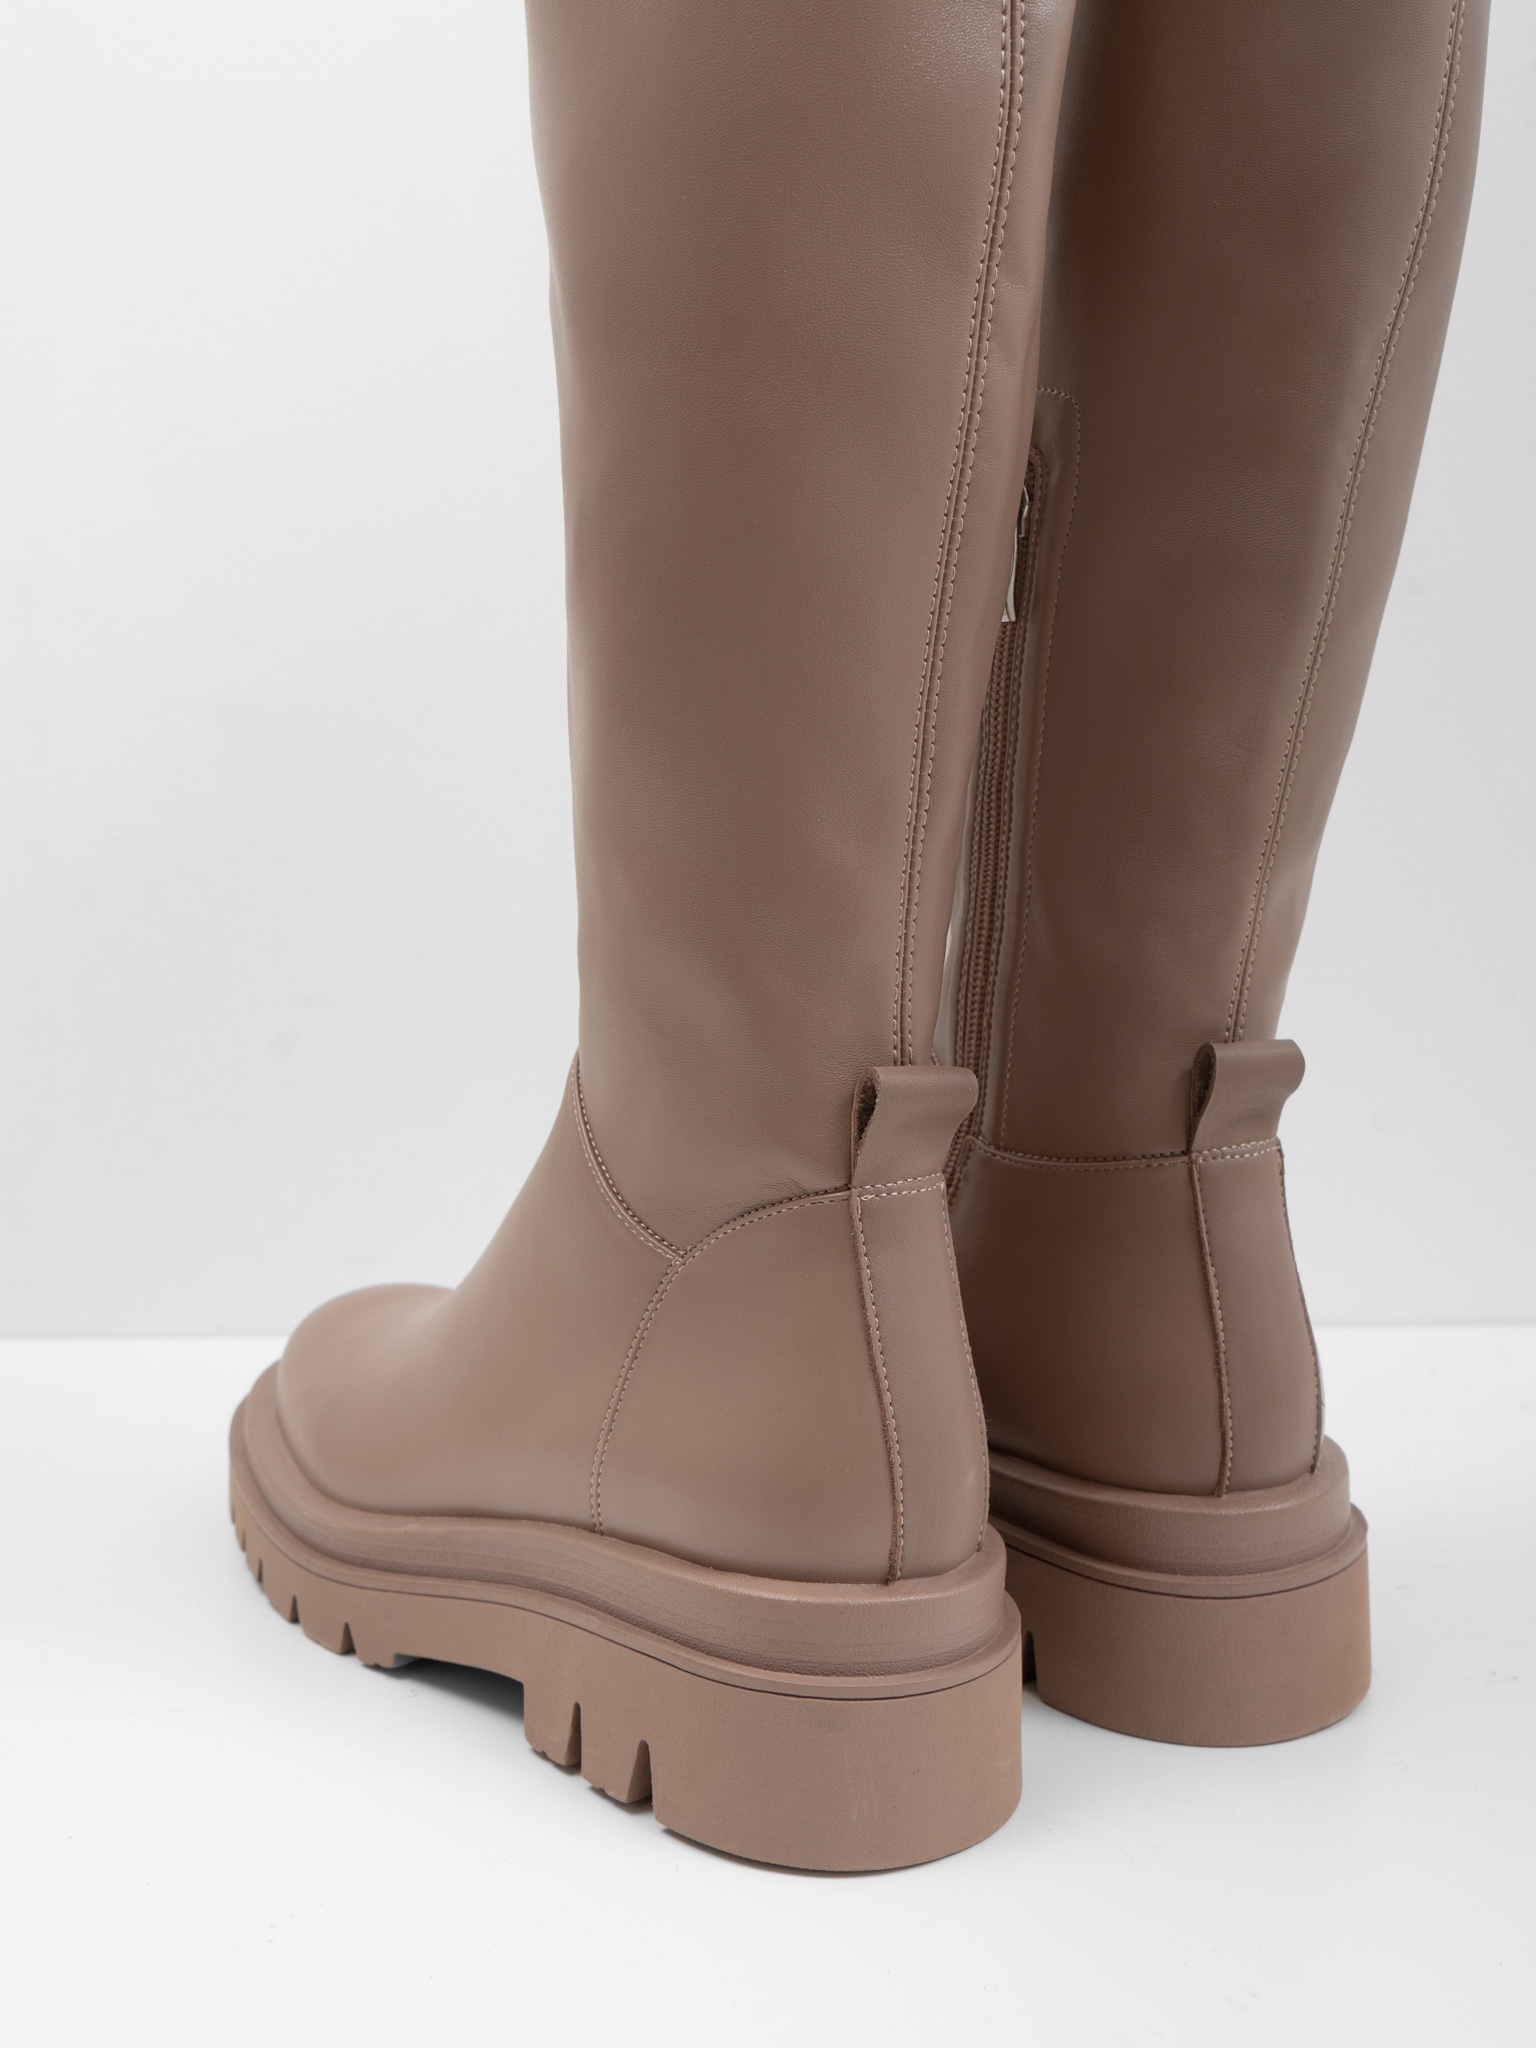 Over-the-knee platform boots